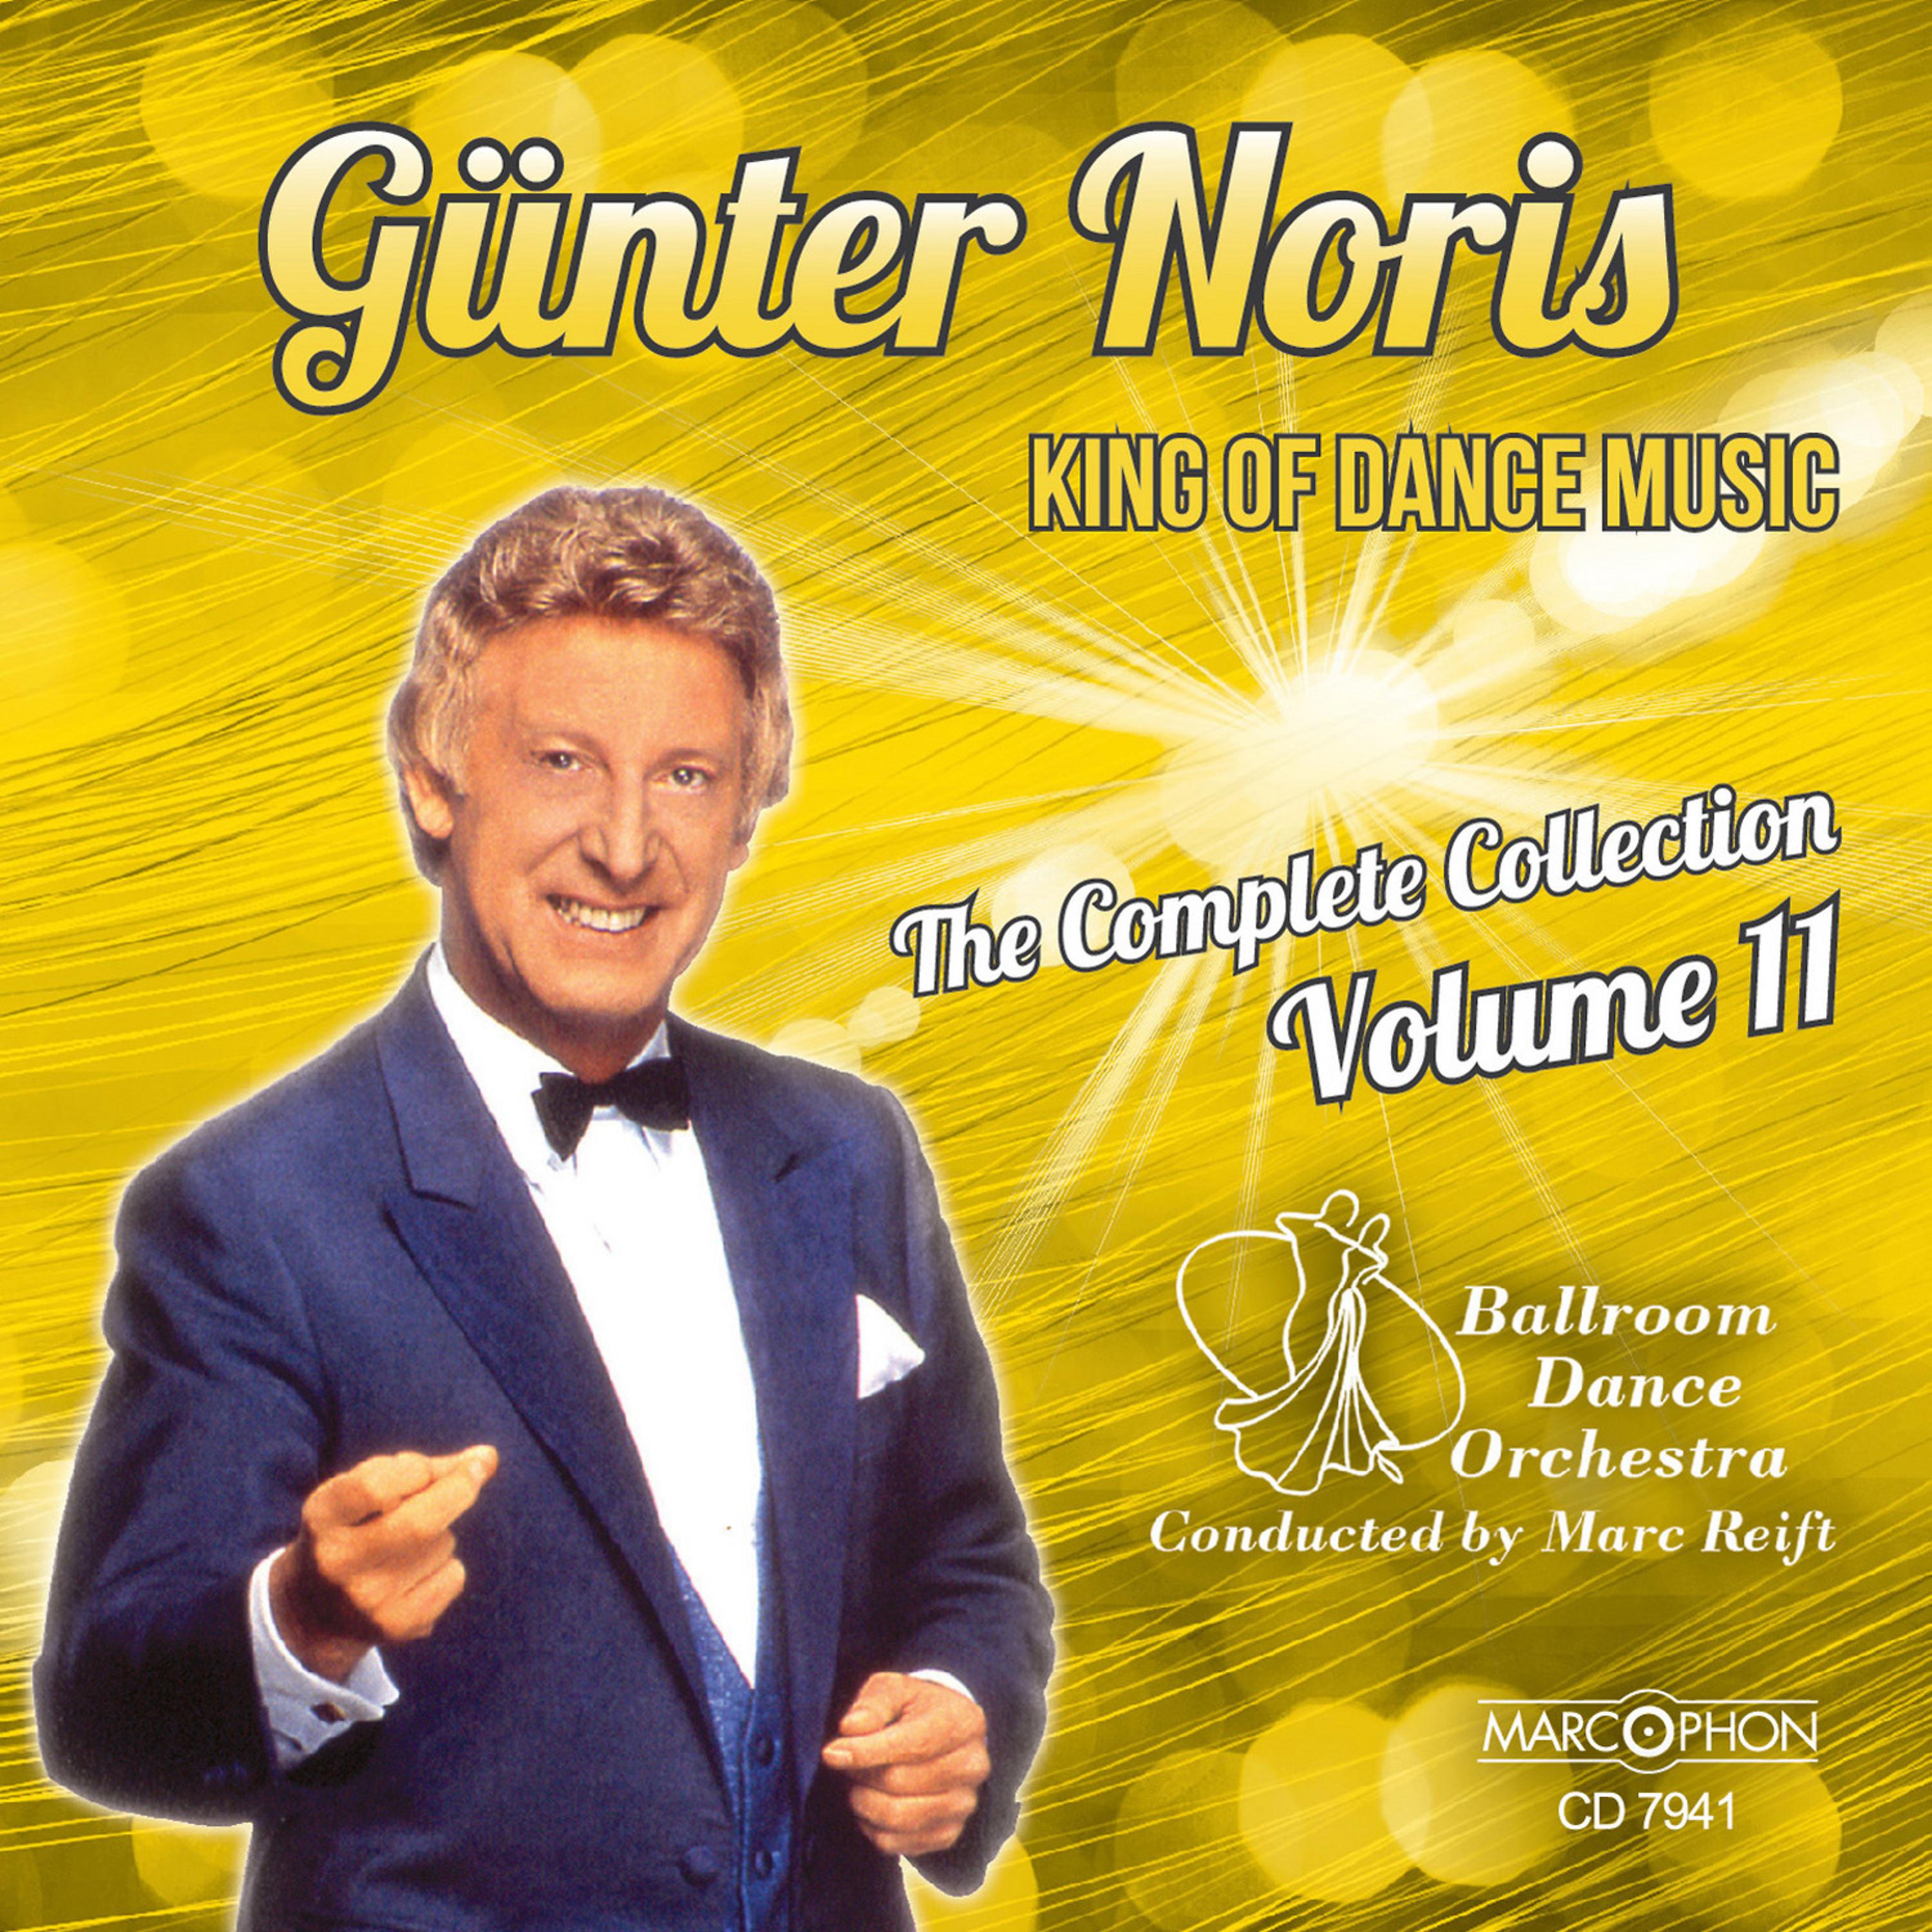 Постер альбома Günter Noris "King of Dance Music" The Complete Collection Volume 11